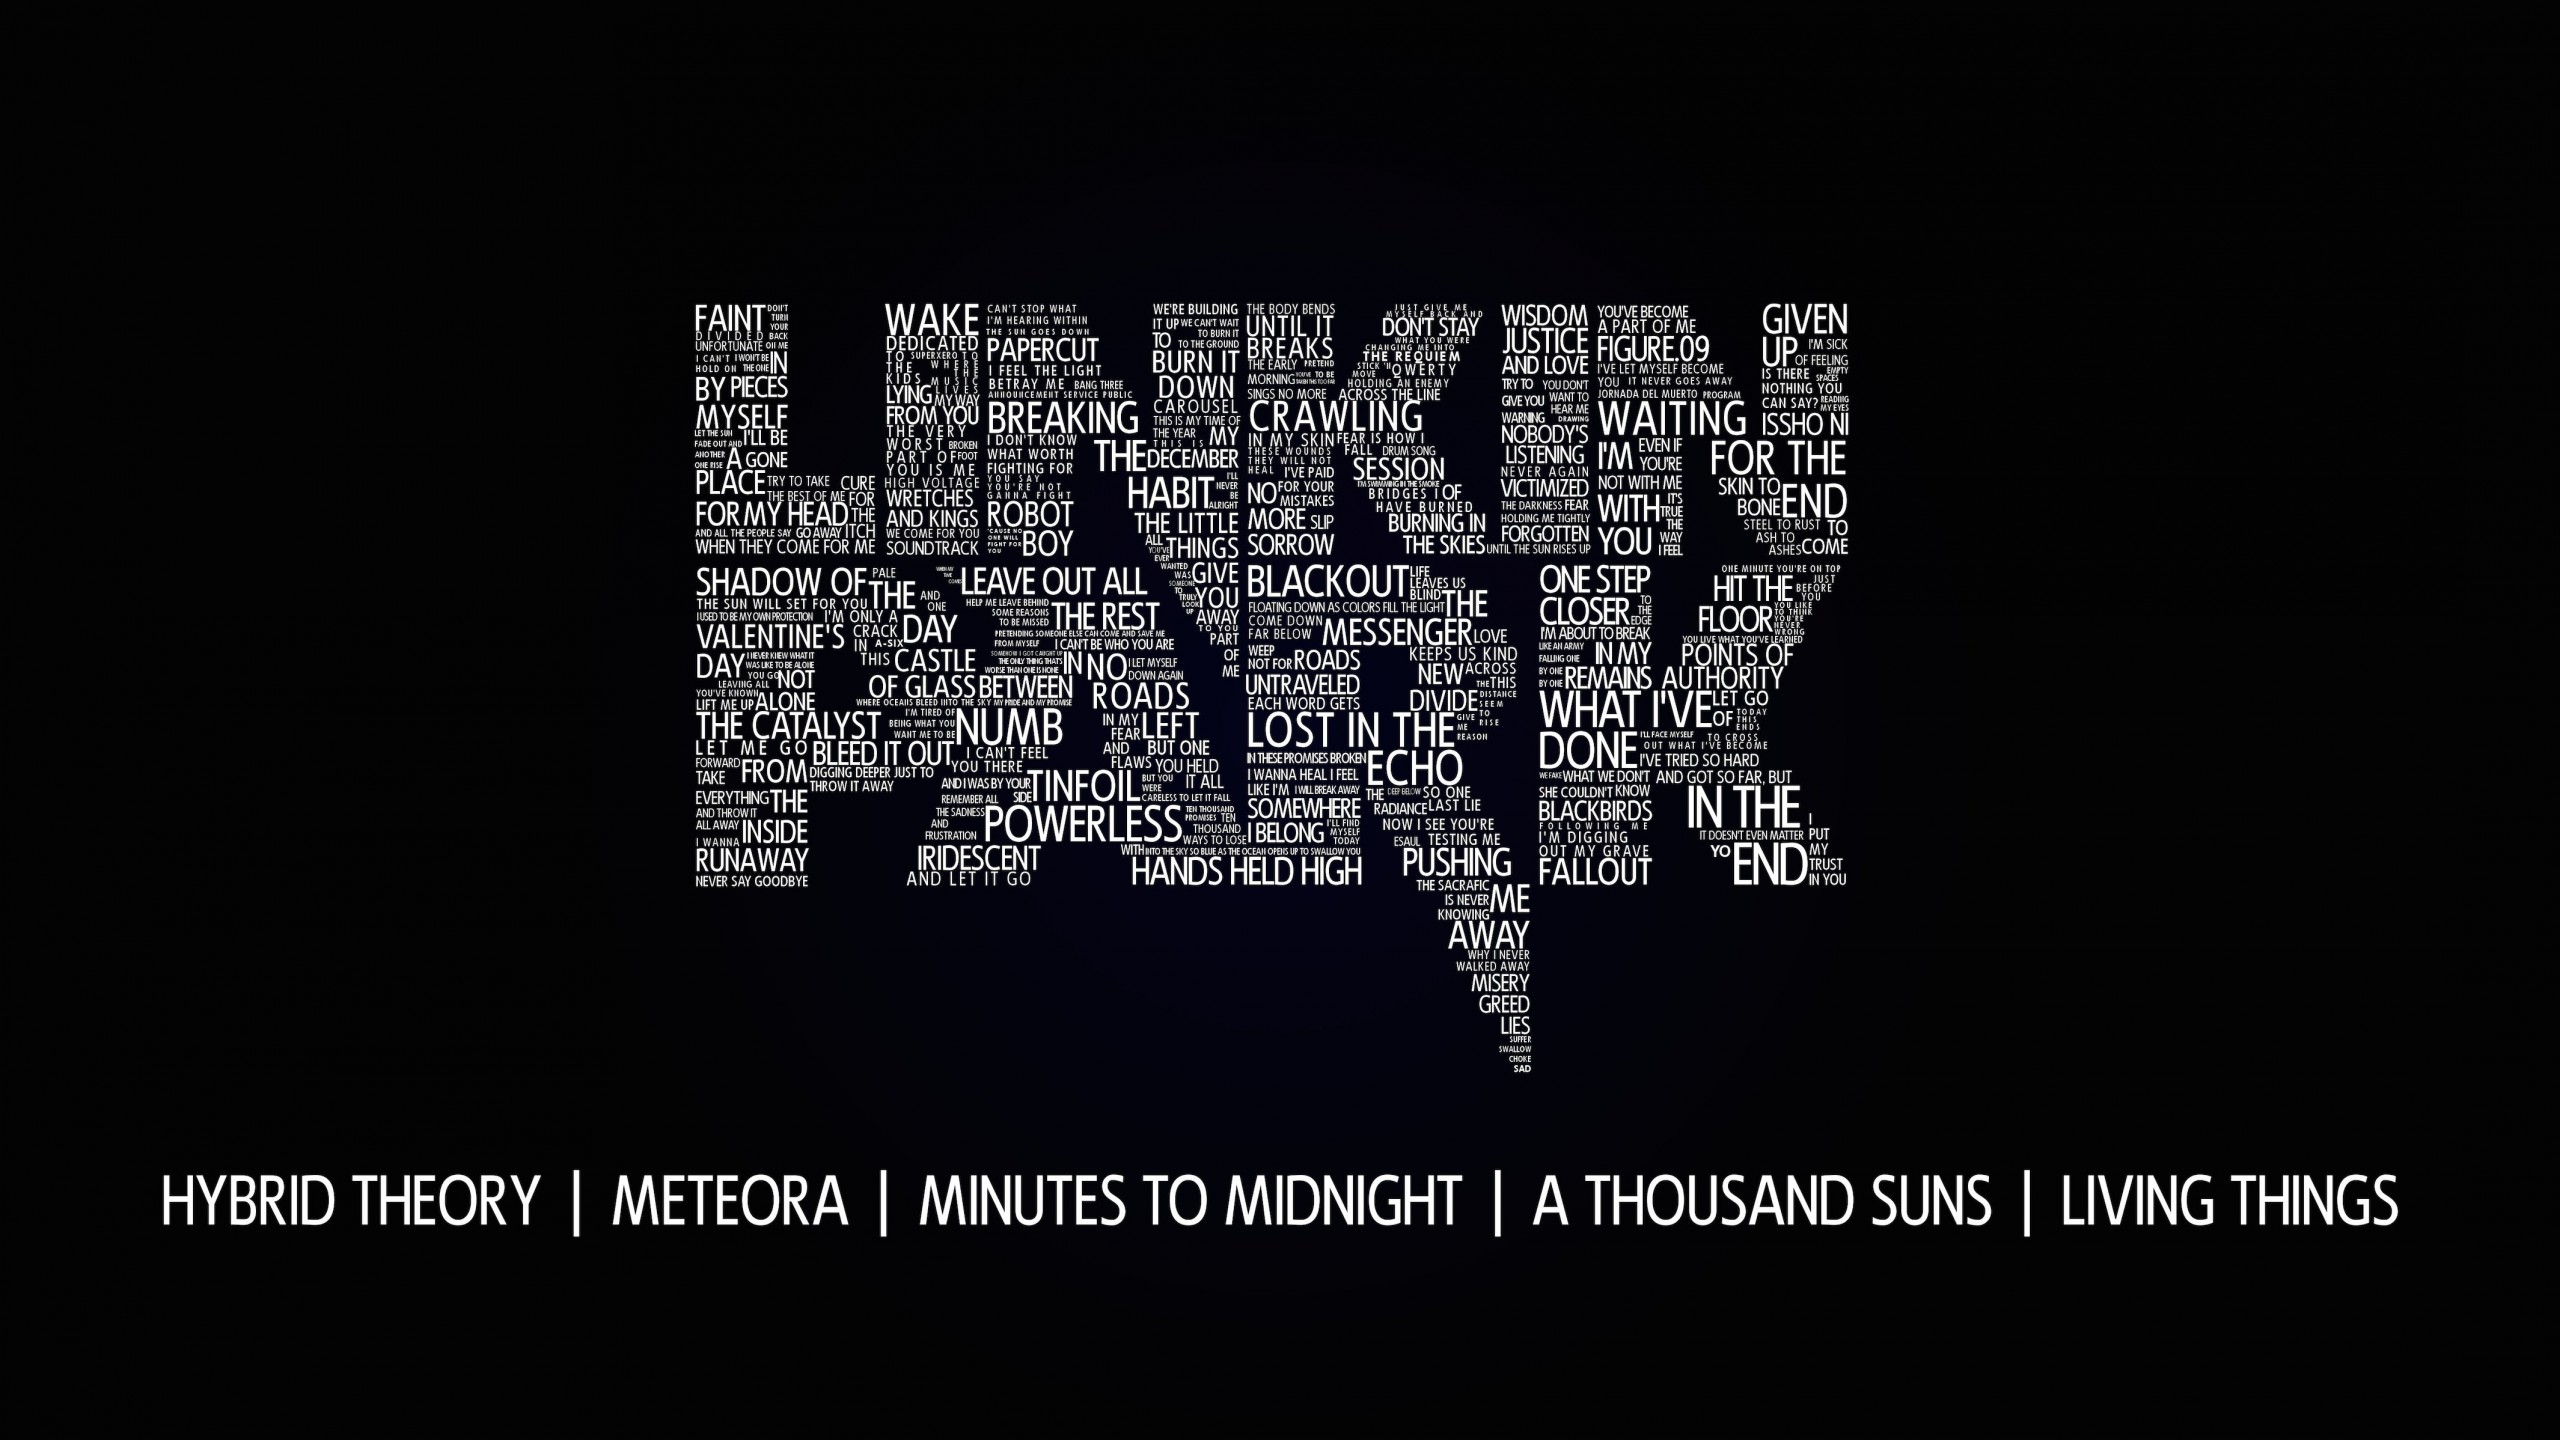 Linkin Park Typography Wallpaper for Social Media YouTube Channel Art